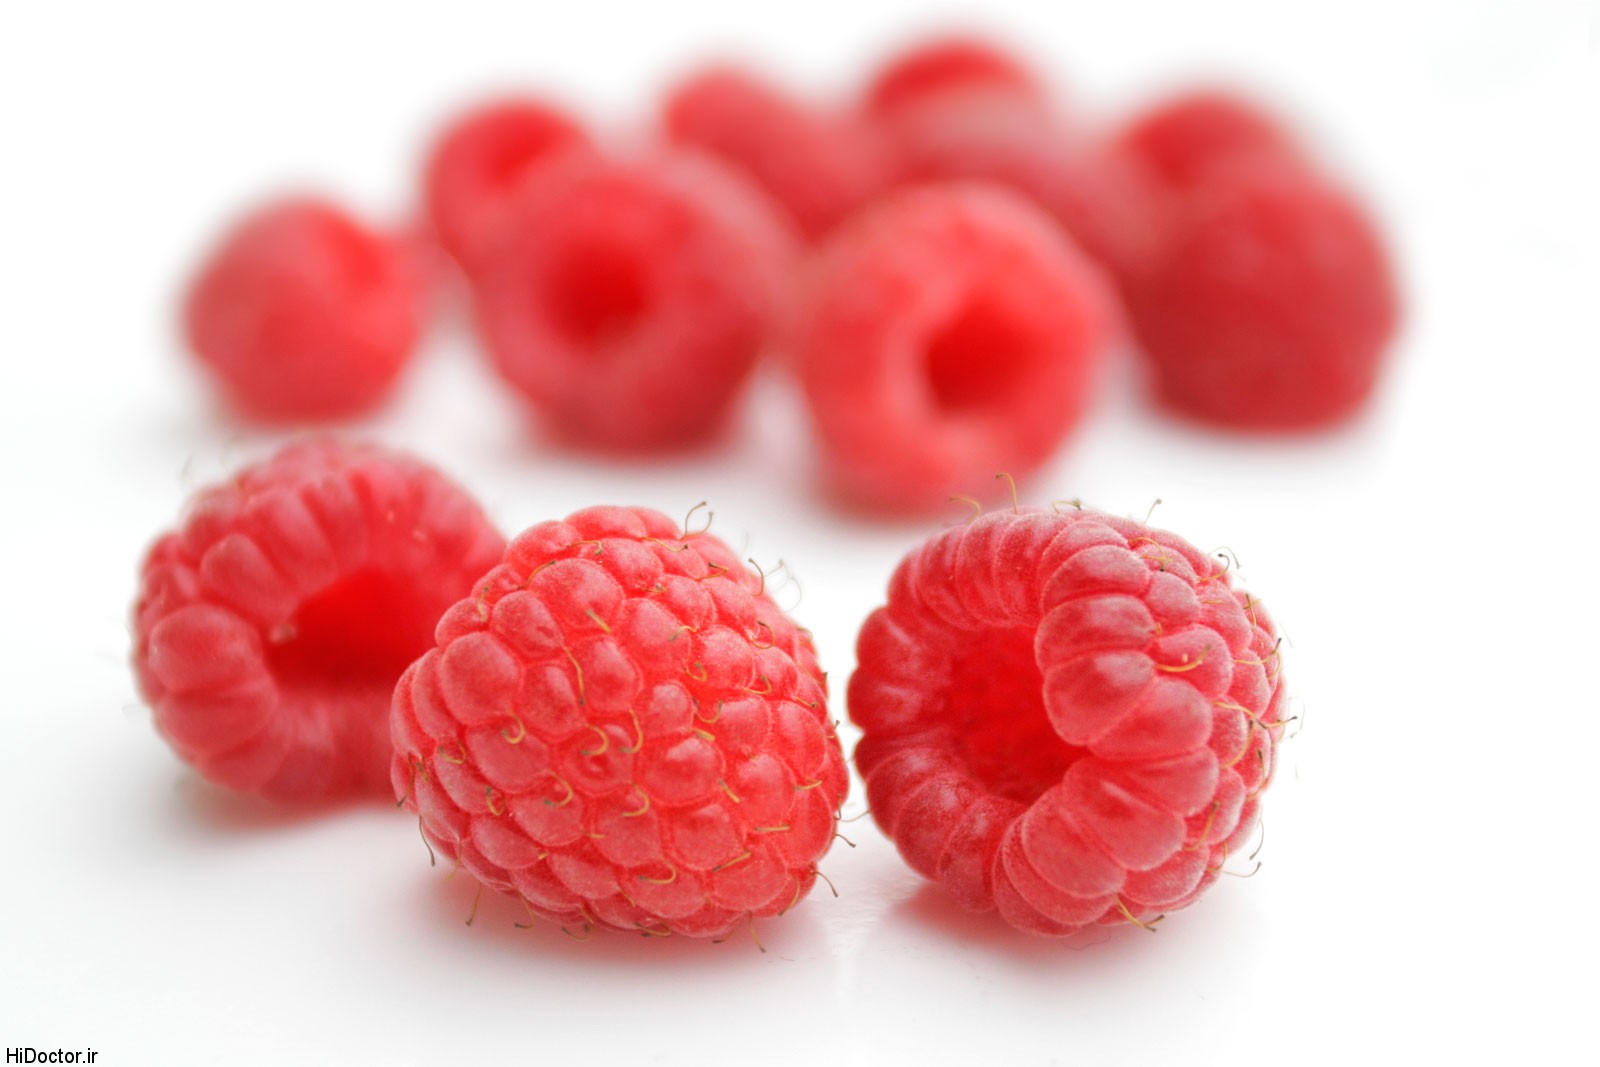 Raspberries02